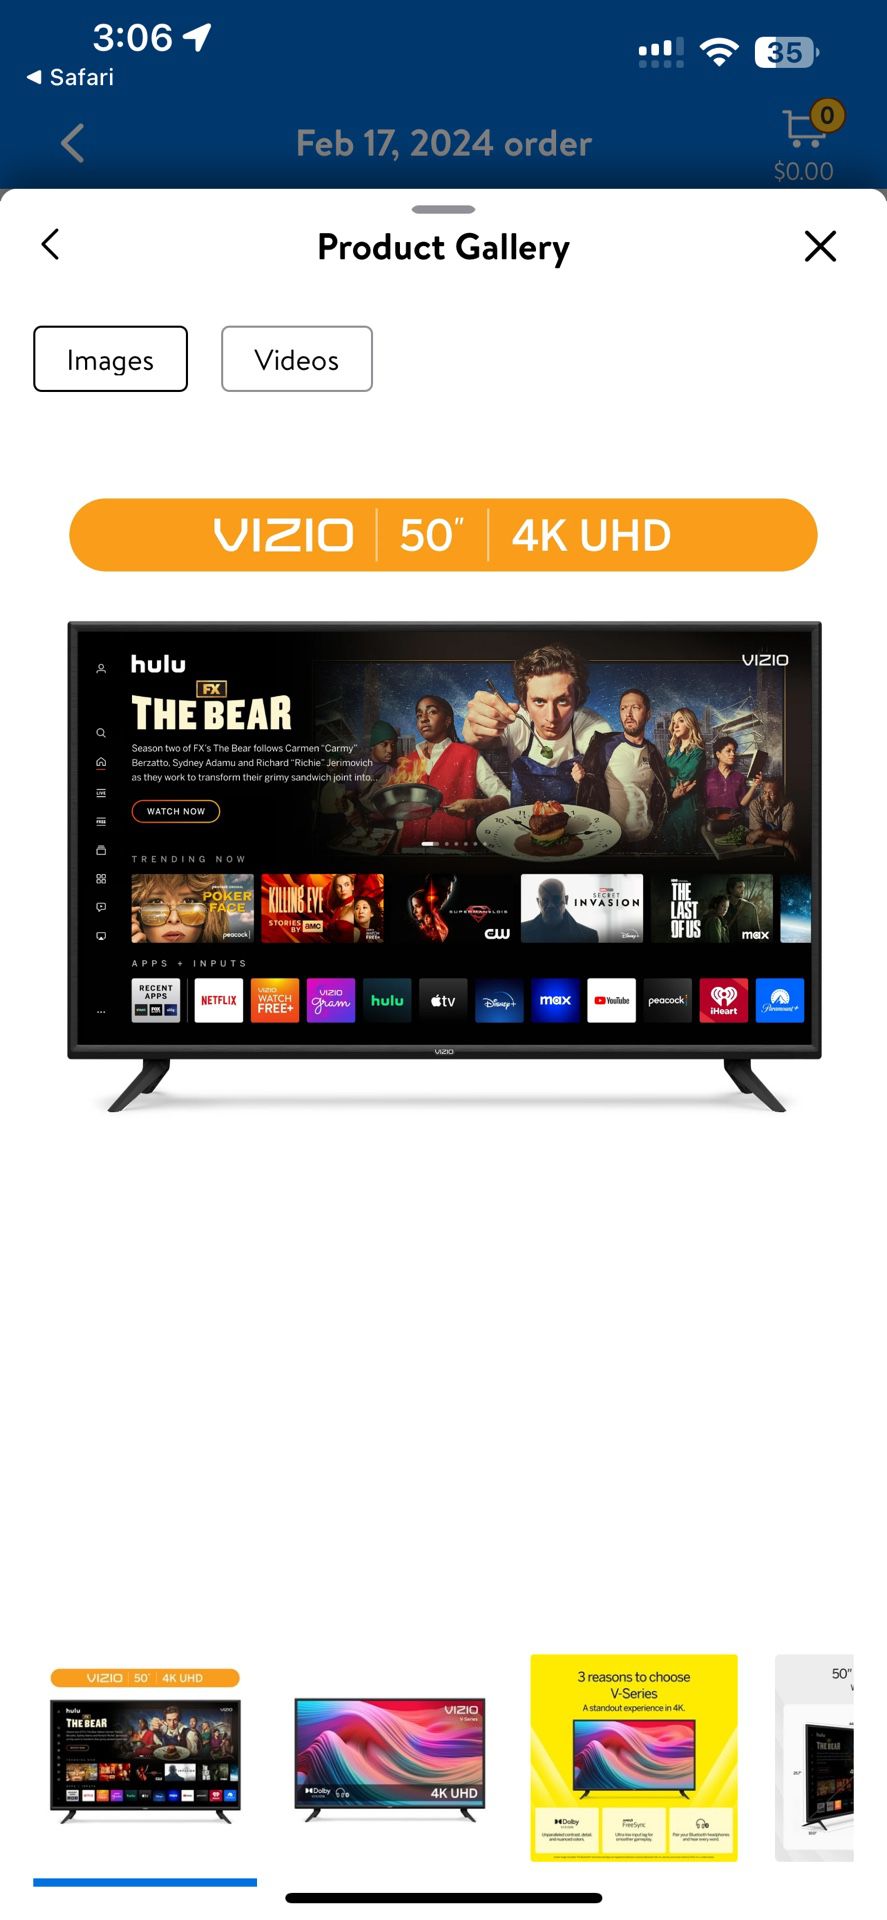 Vizio 50” Class V Series 4k LED Smart TV